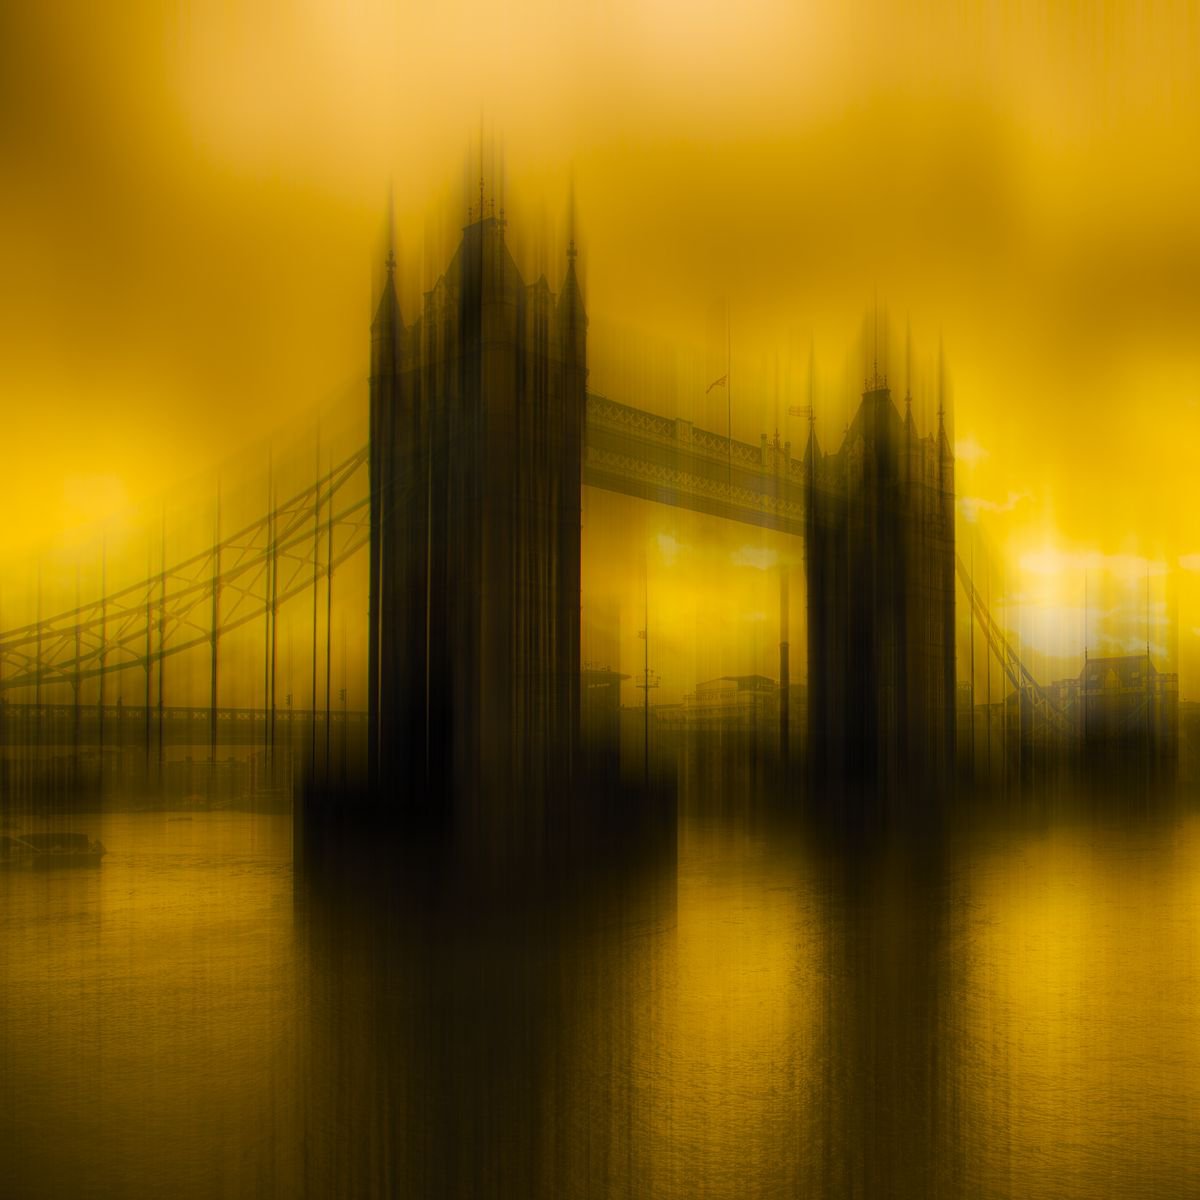 Abstract London: Tower Bridge by Graham Briggs